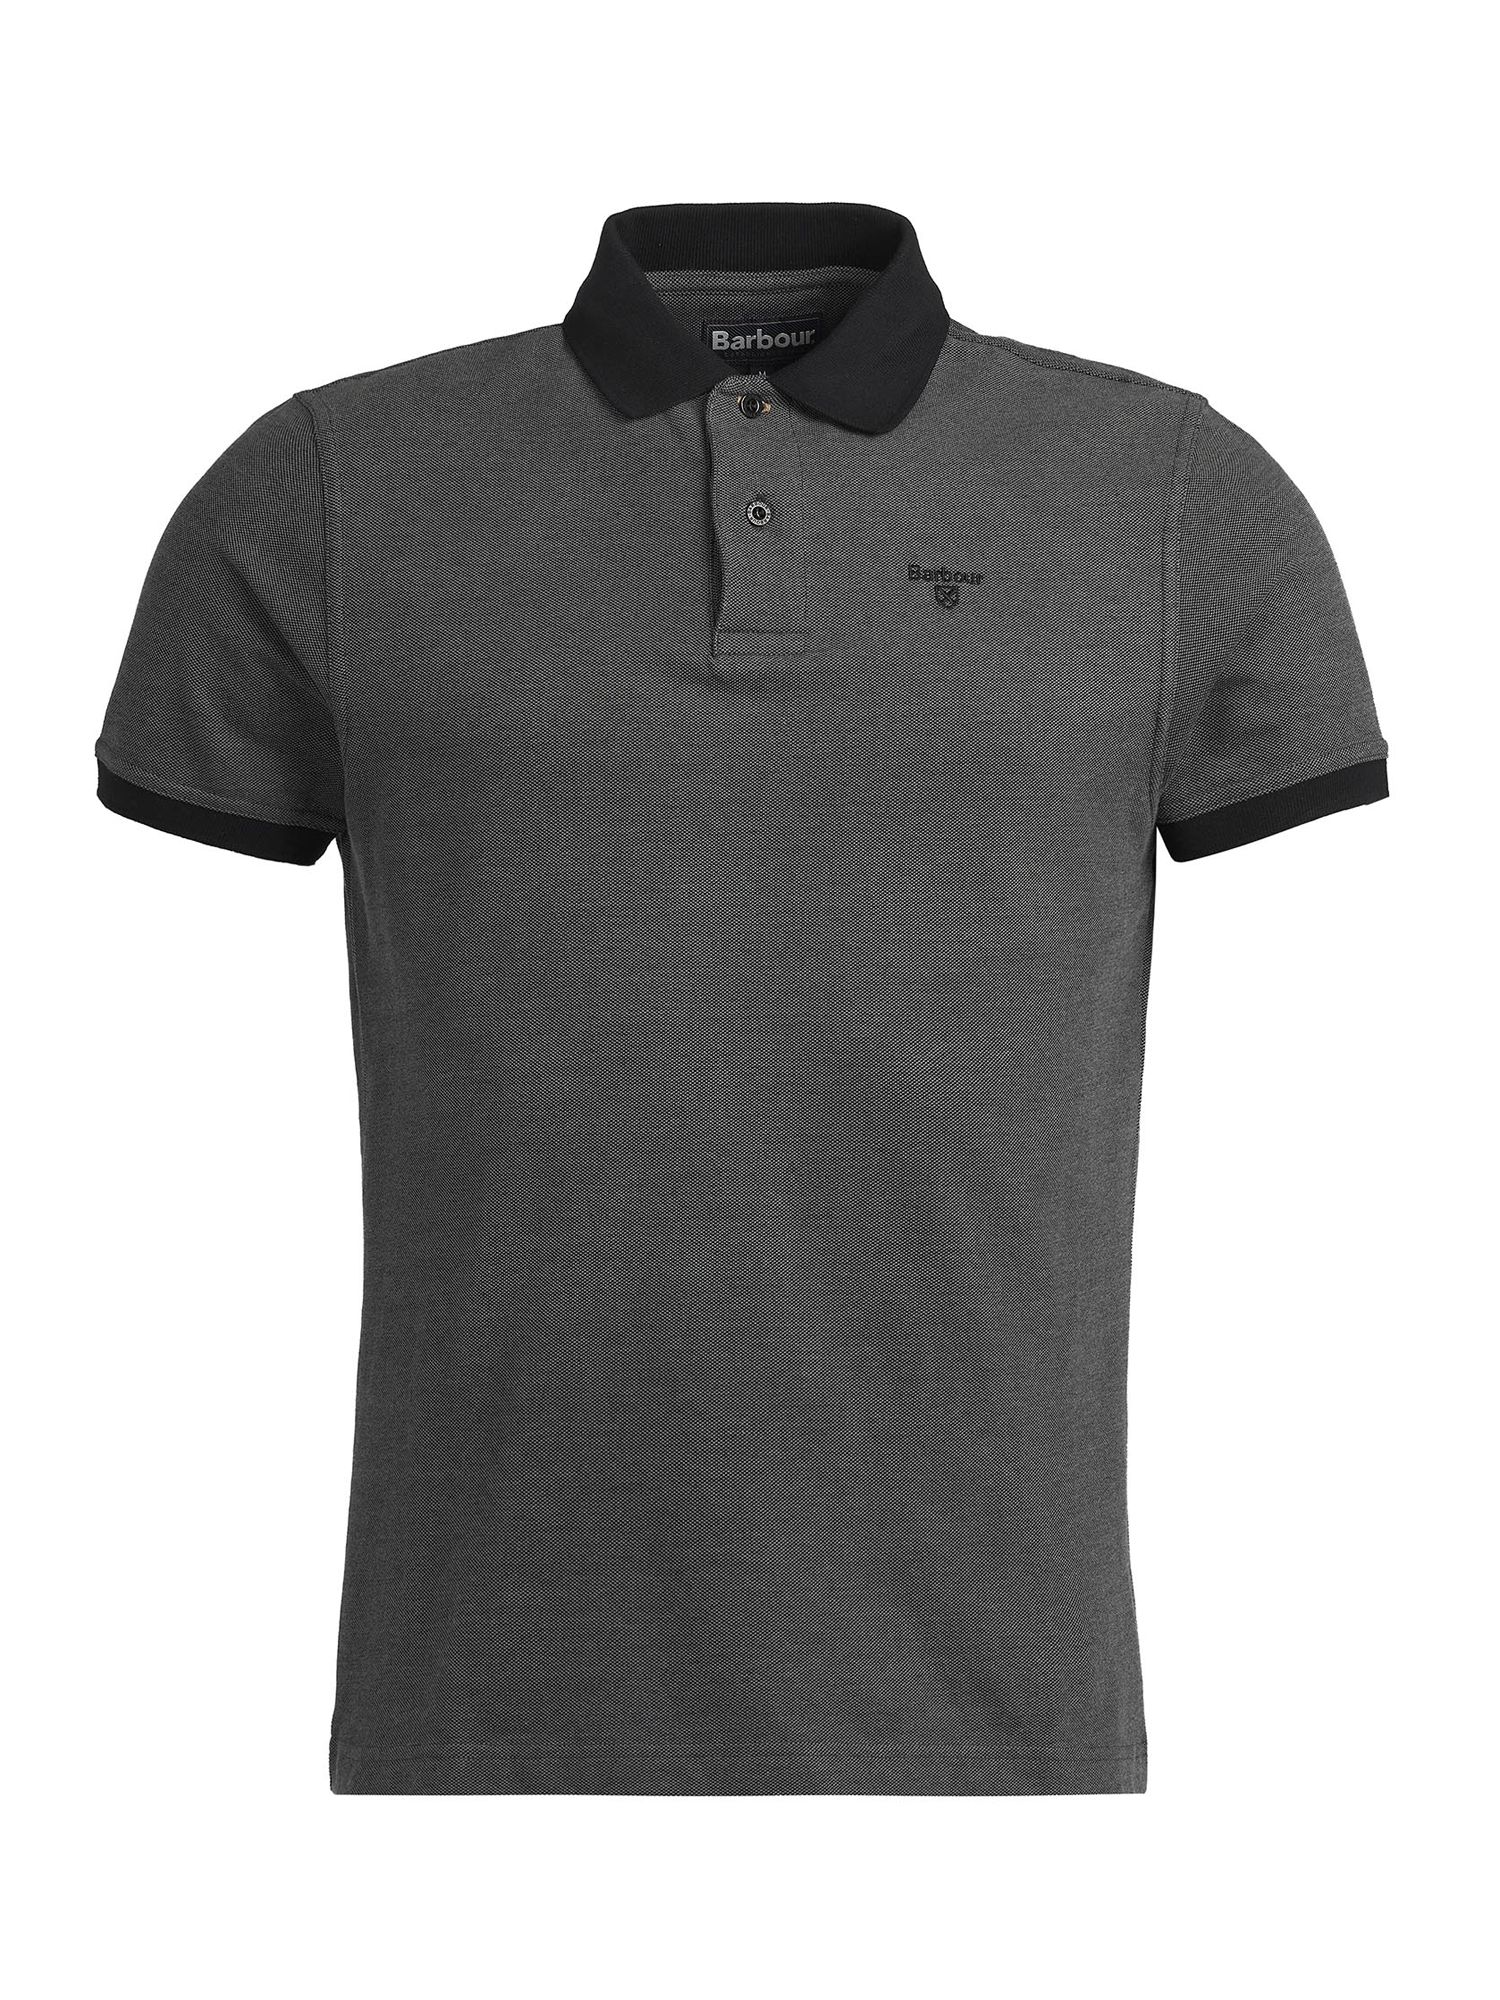 Barbour Sports Polo Shirt, Black, L